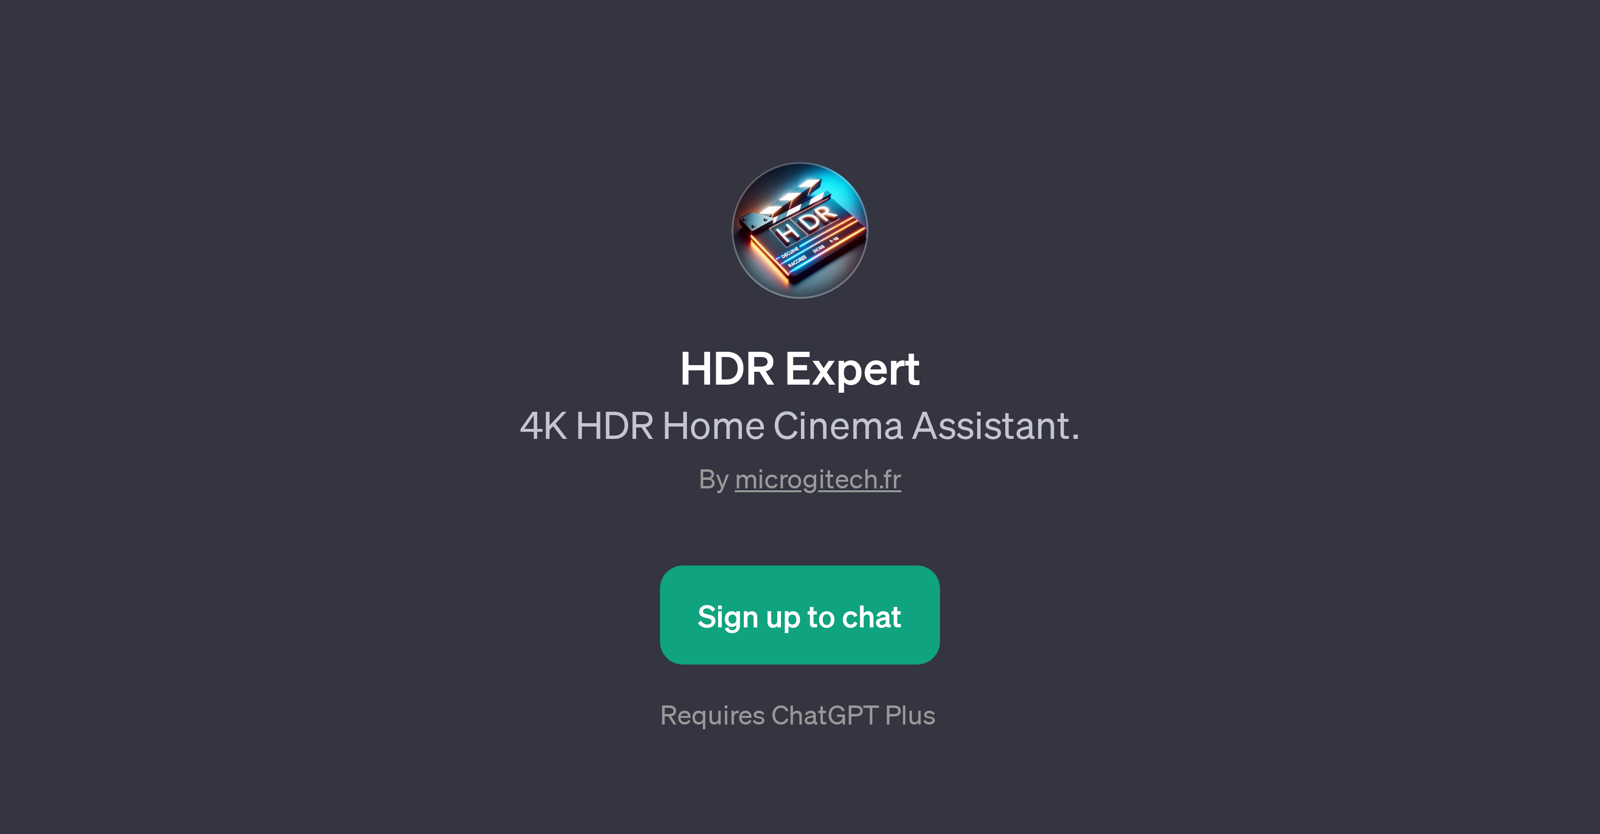 HDR Expert website